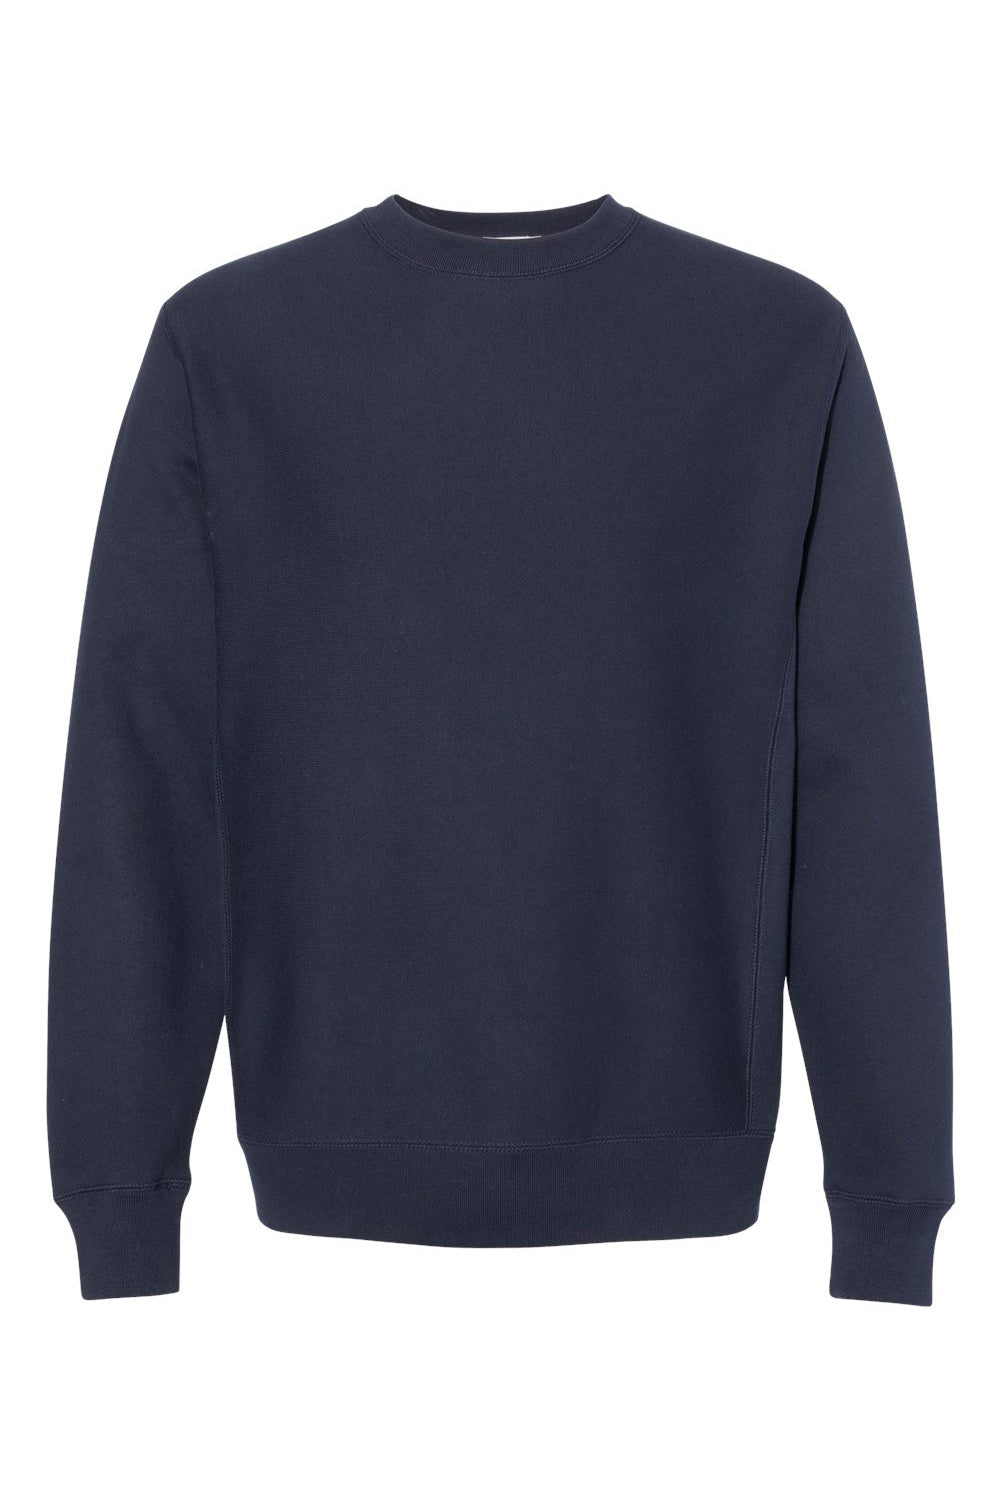 Independent Trading Co. IND5000C Mens Legend Crewneck Sweatshirt Classic Navy Blue Flat Front